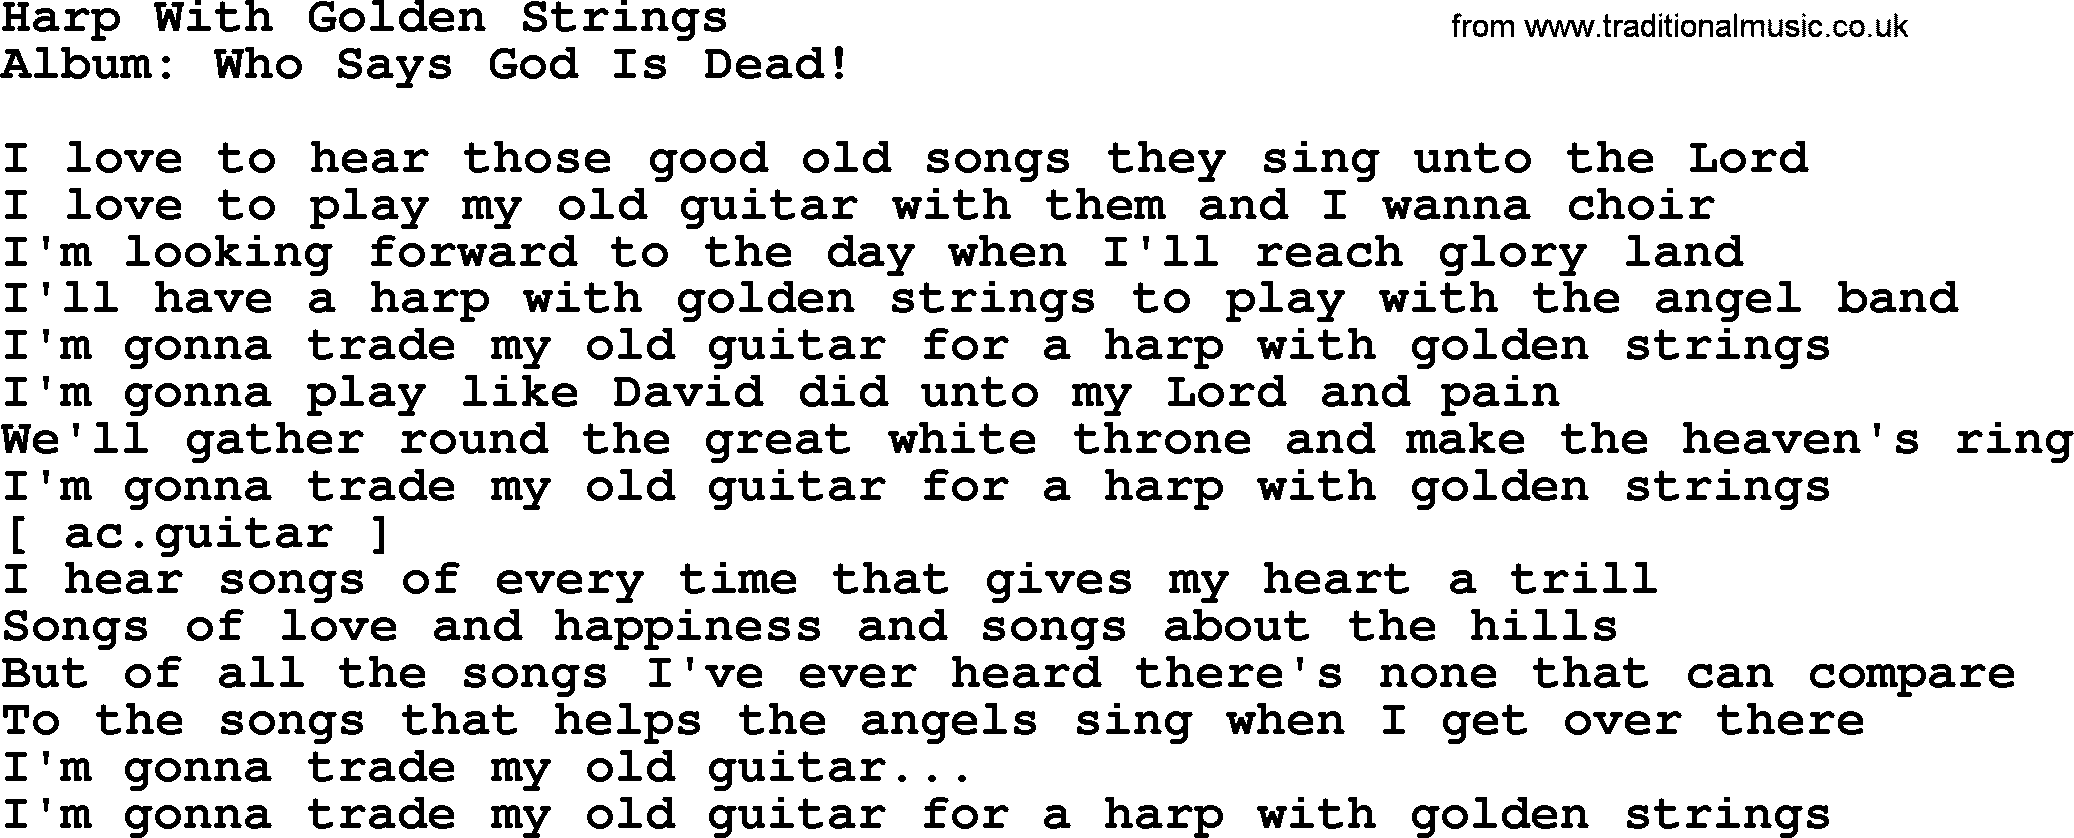 Loretta Lynn song: Harp With Golden Strings lyrics